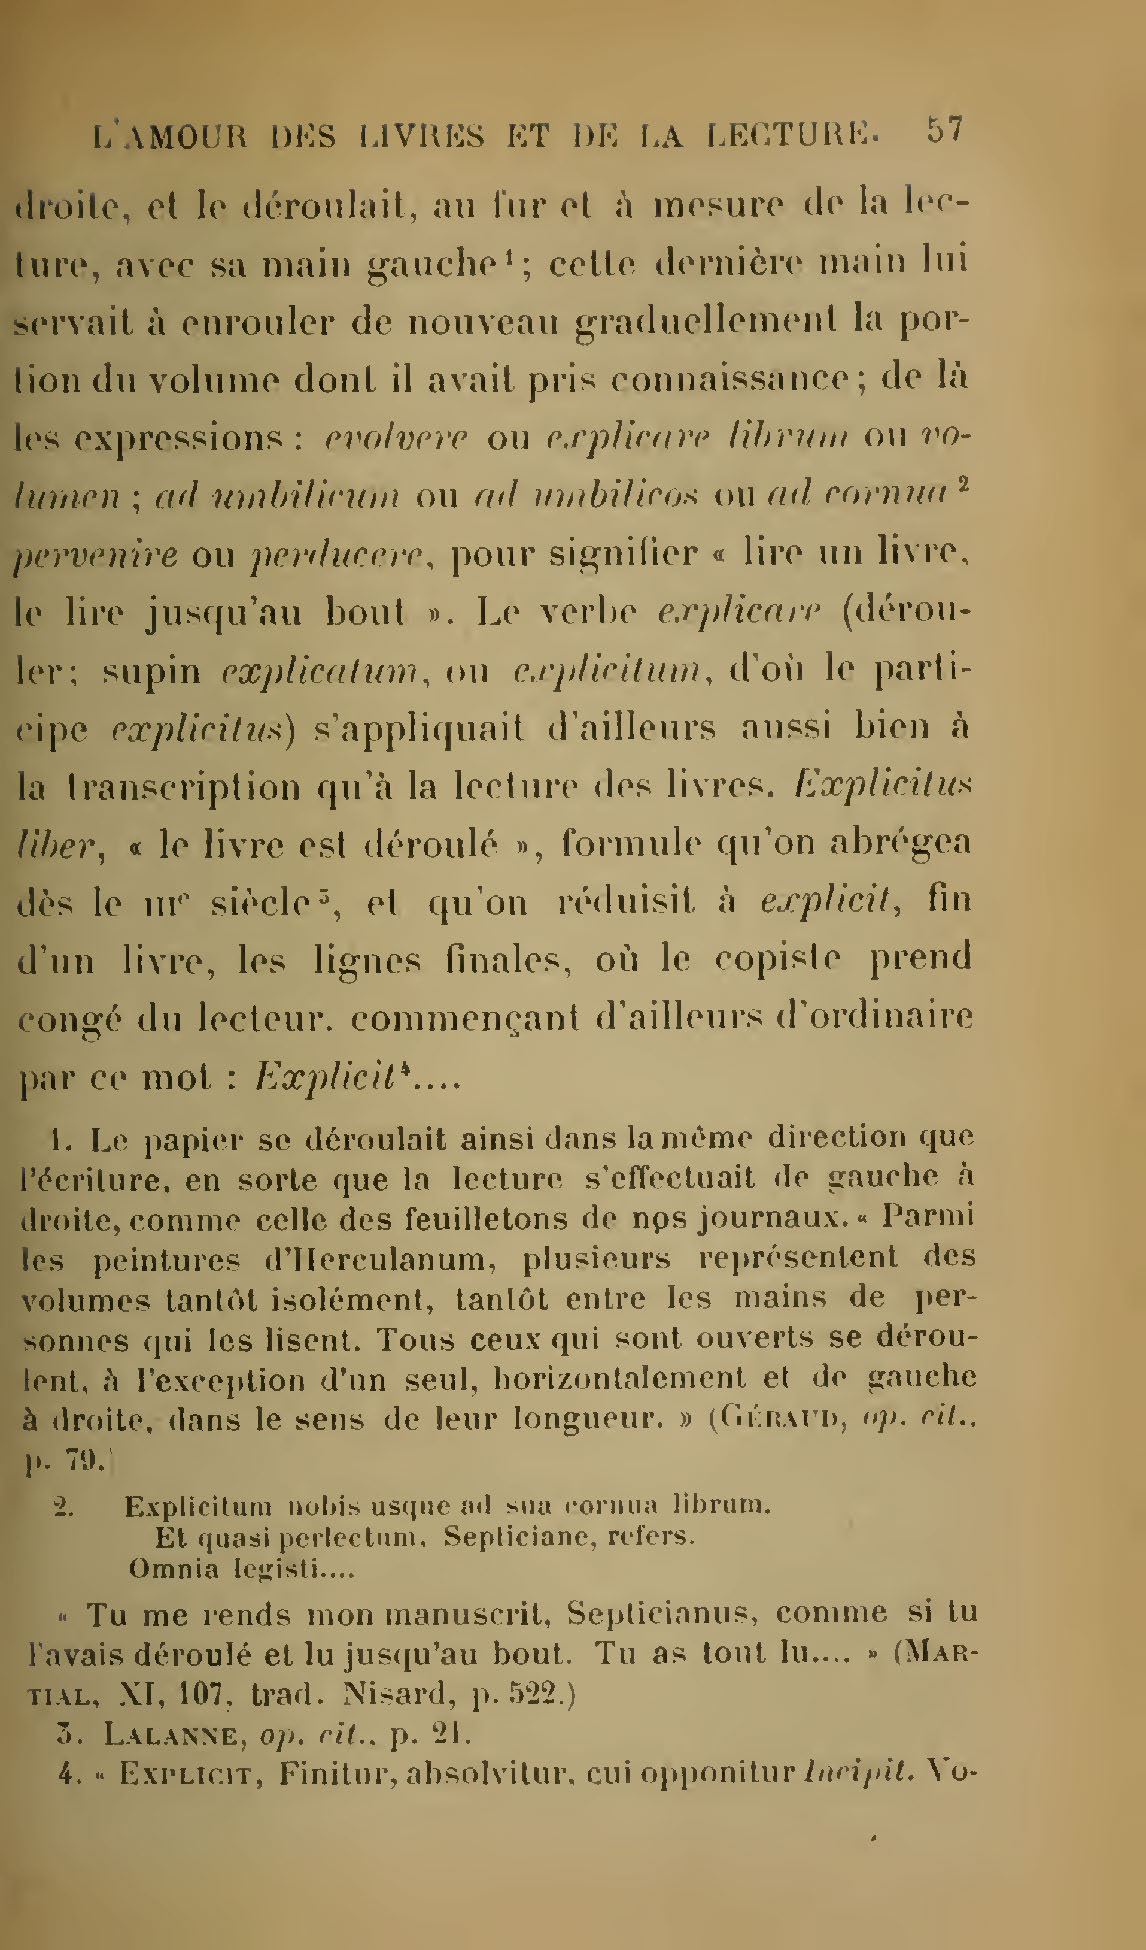 Albert Cim, Le Livre, t. I, p. 57.